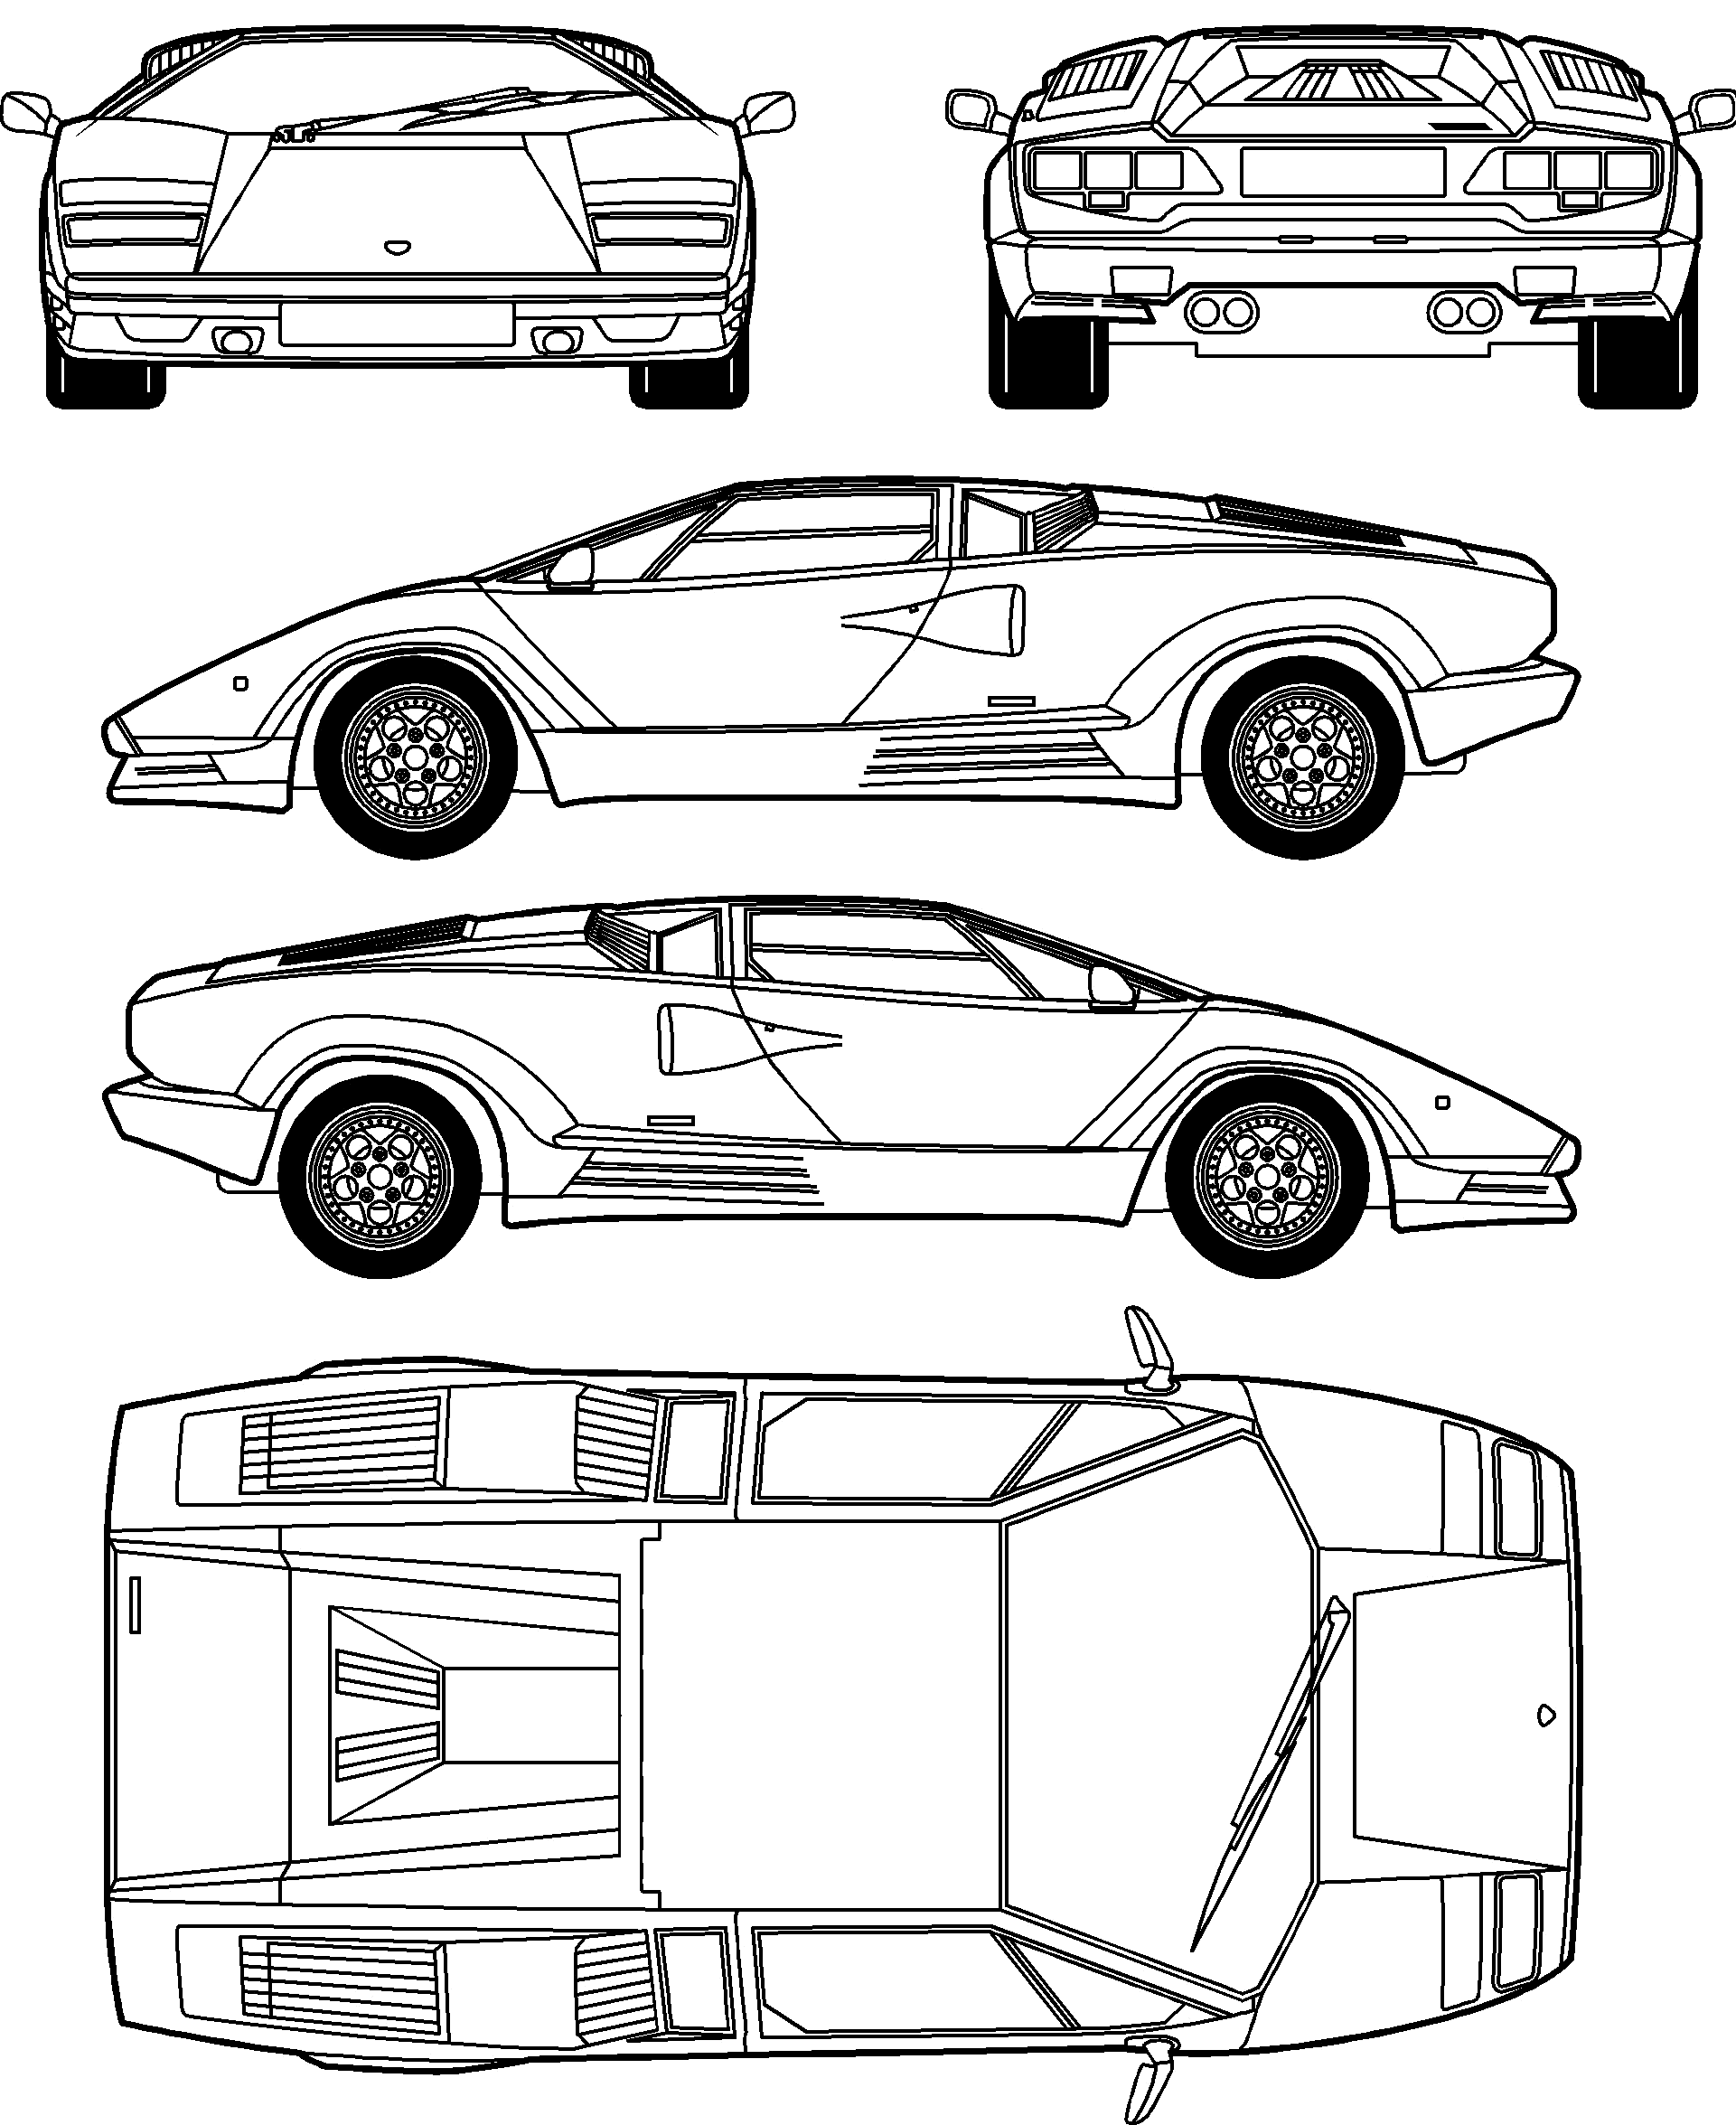 Lamborghini Countach 5000 S